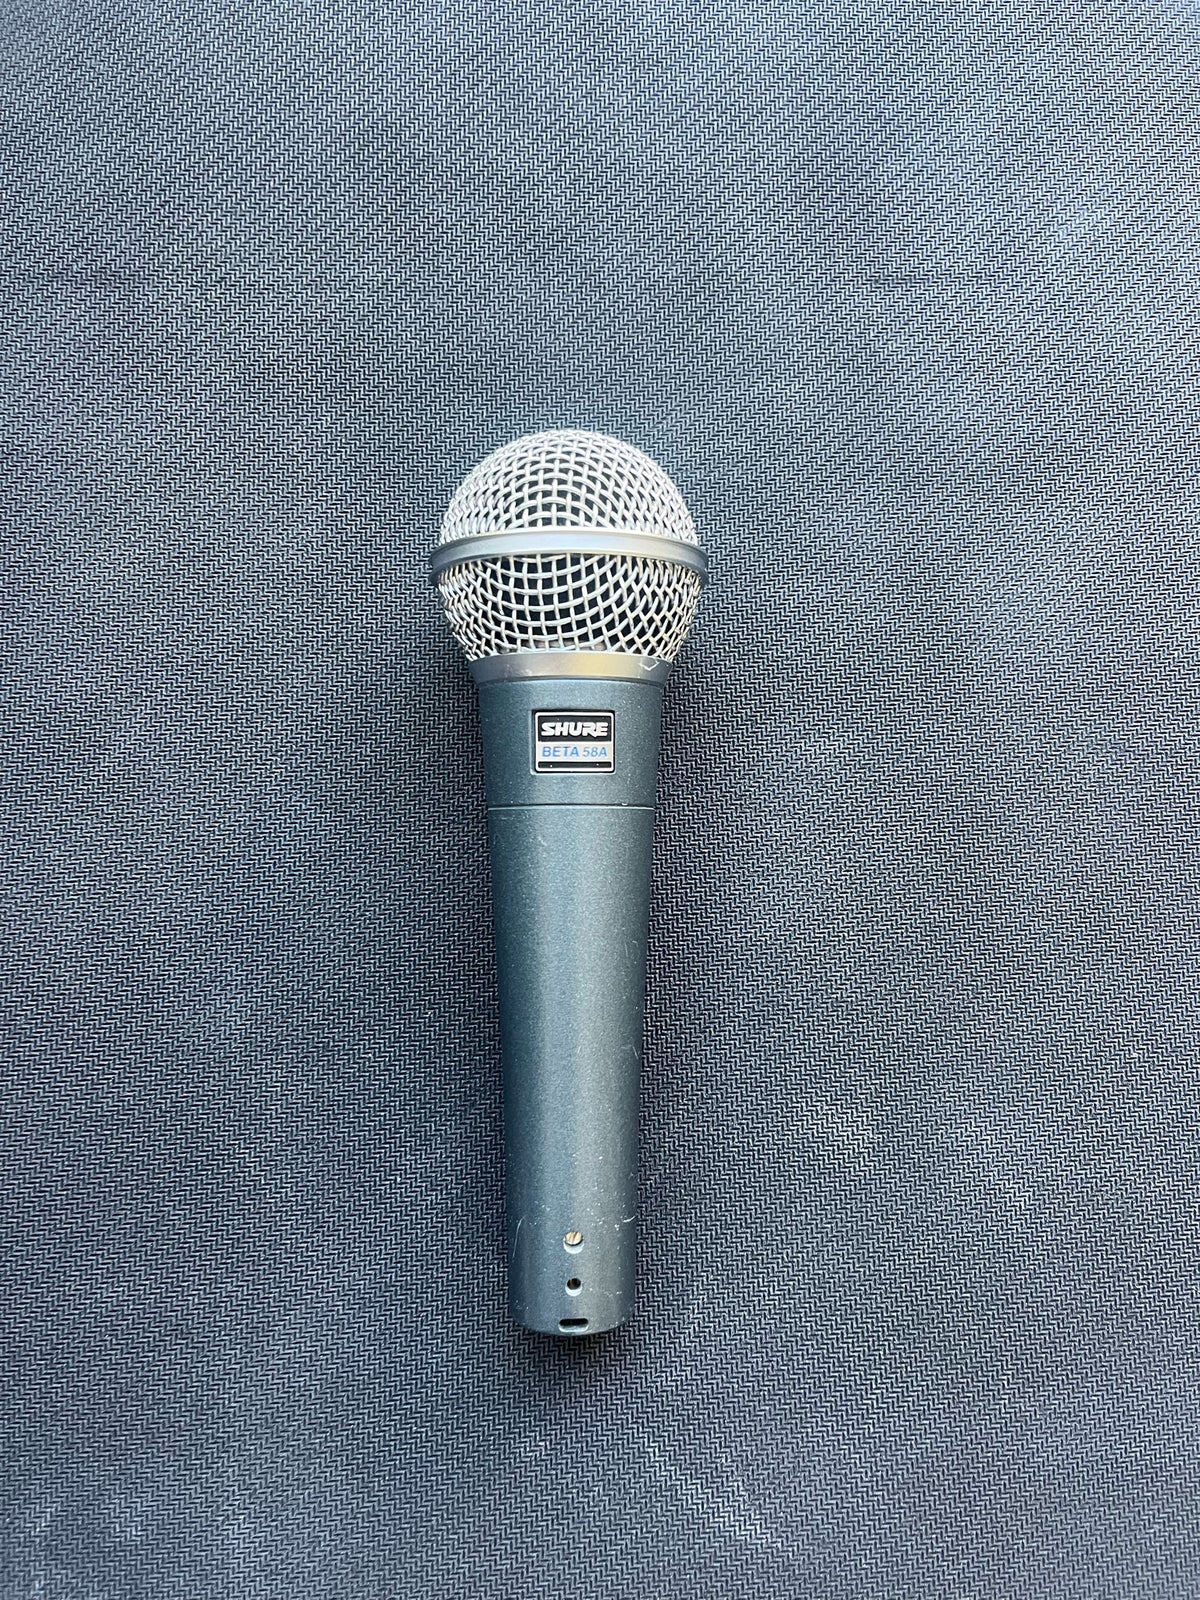 mikrofon, Shure Beta 58A